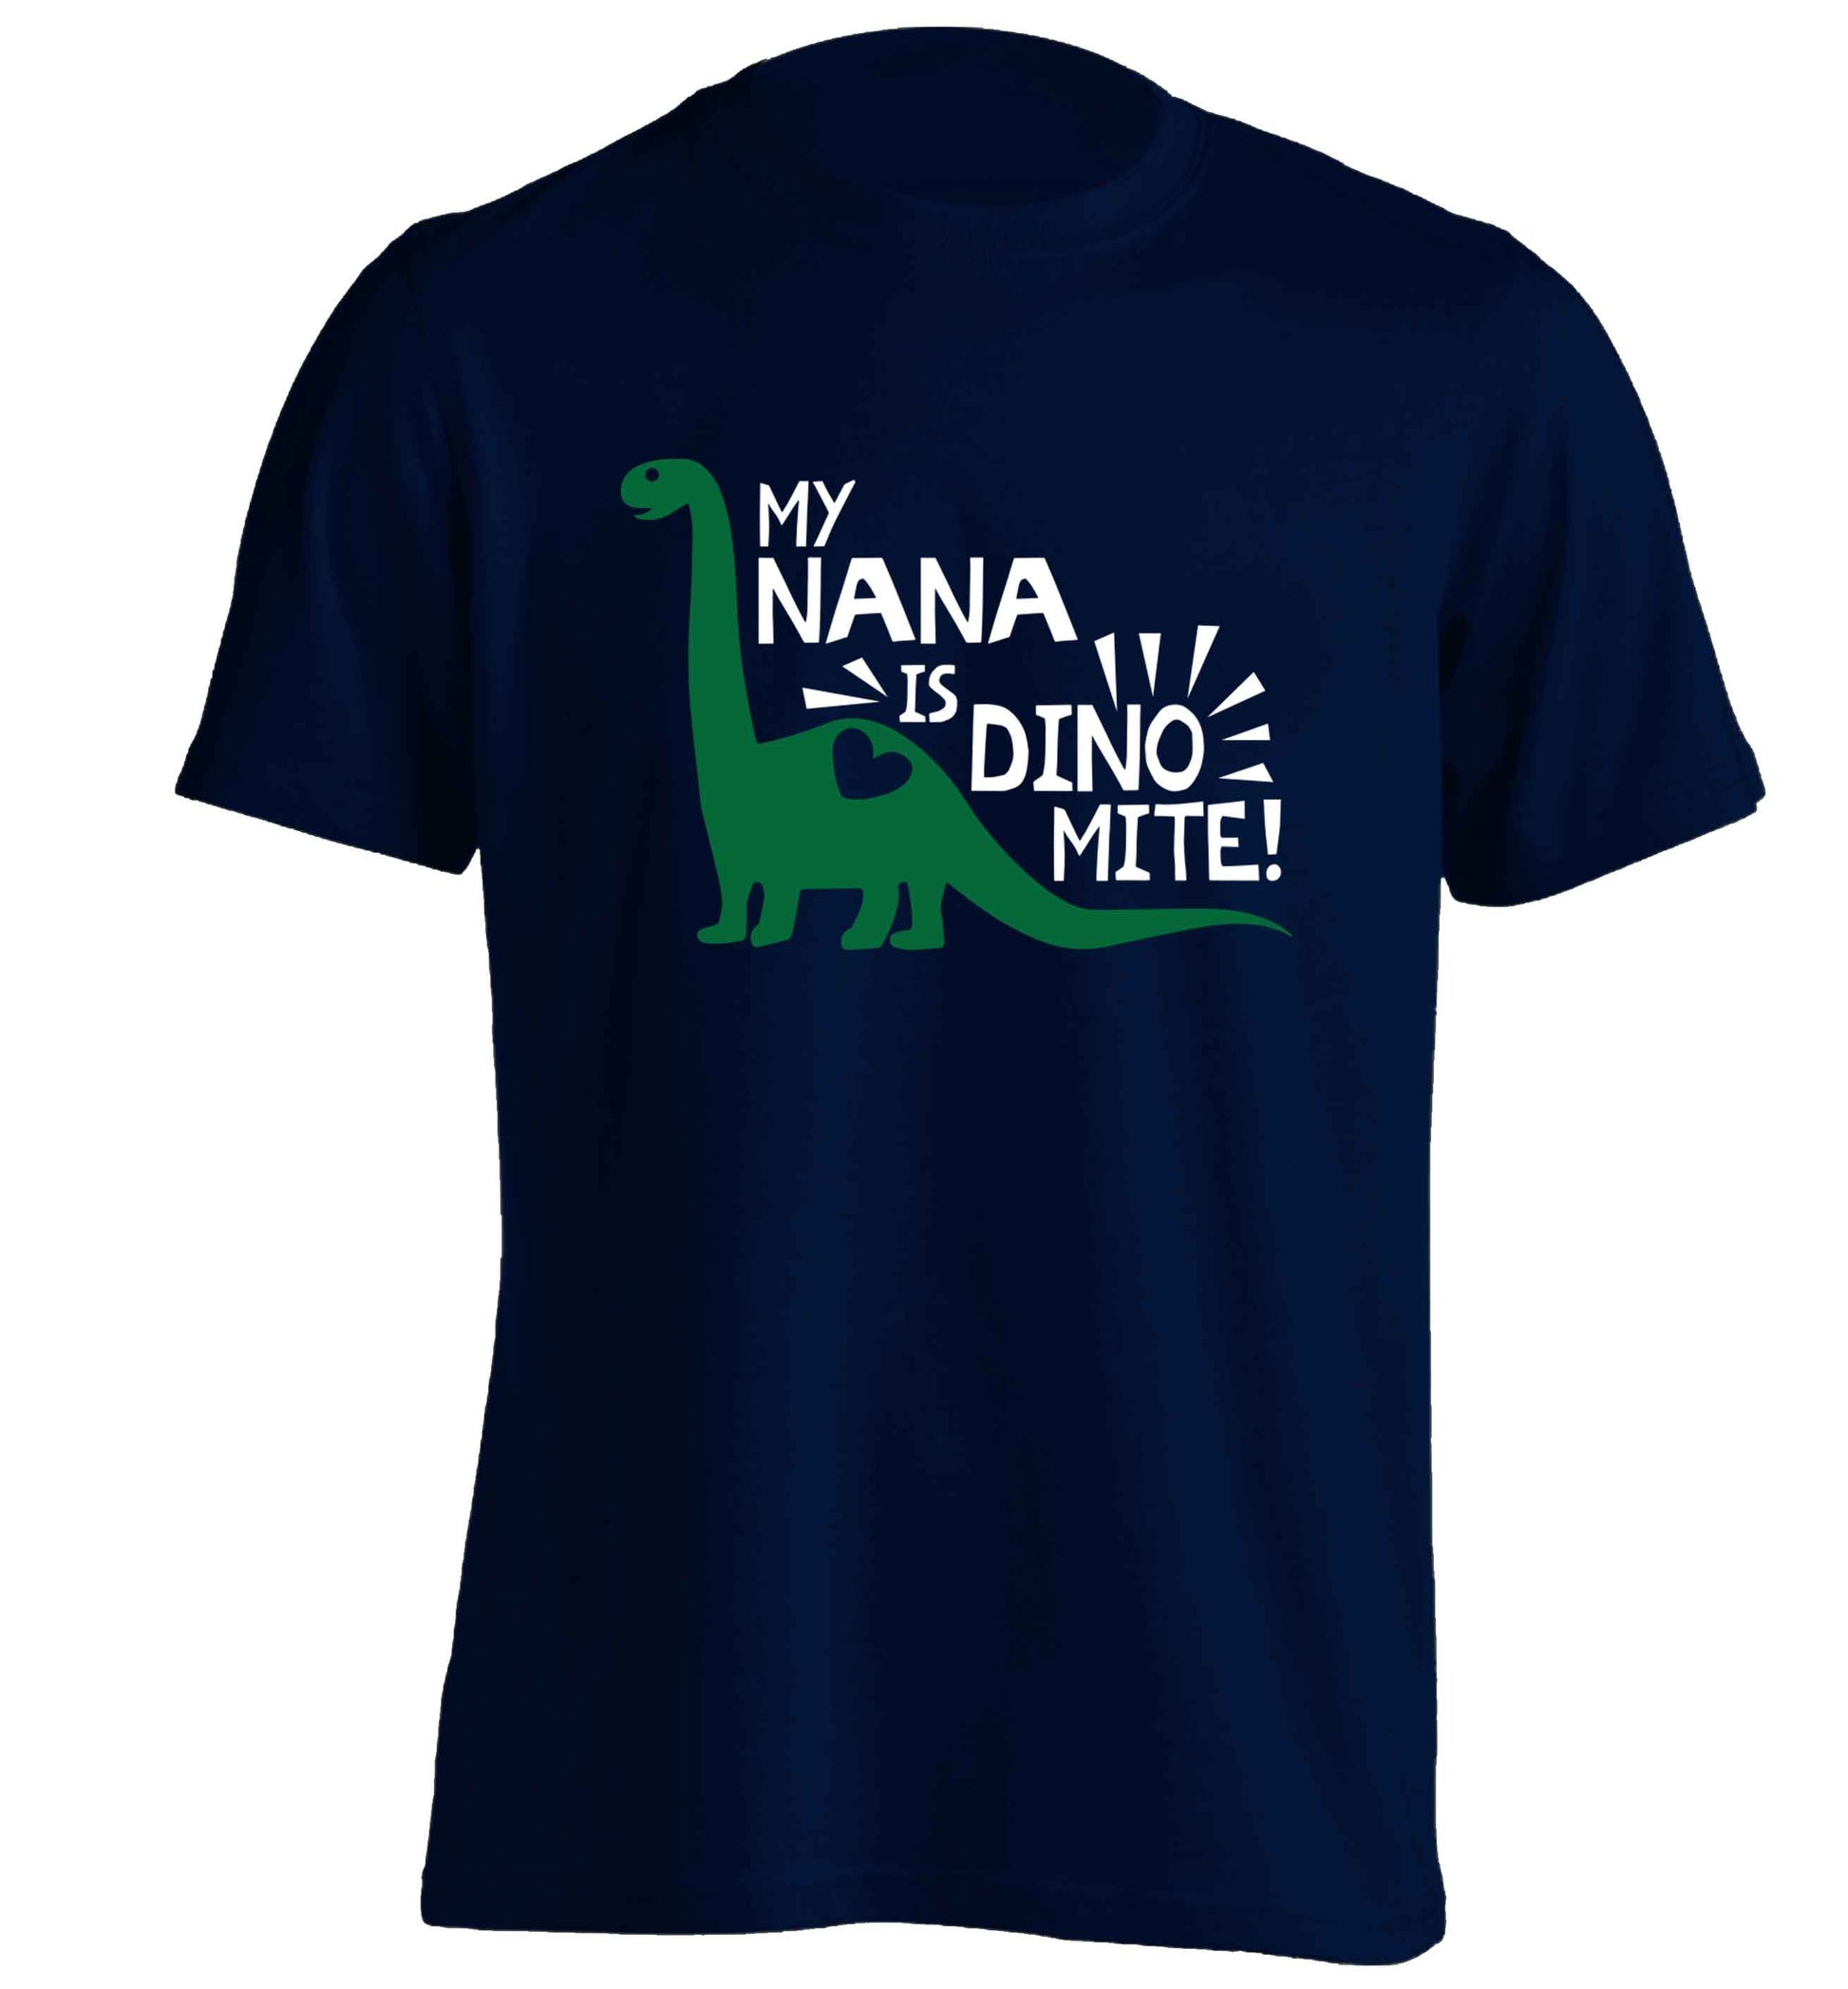 My nana is dinomite! adults unisex navy Tshirt 2XL